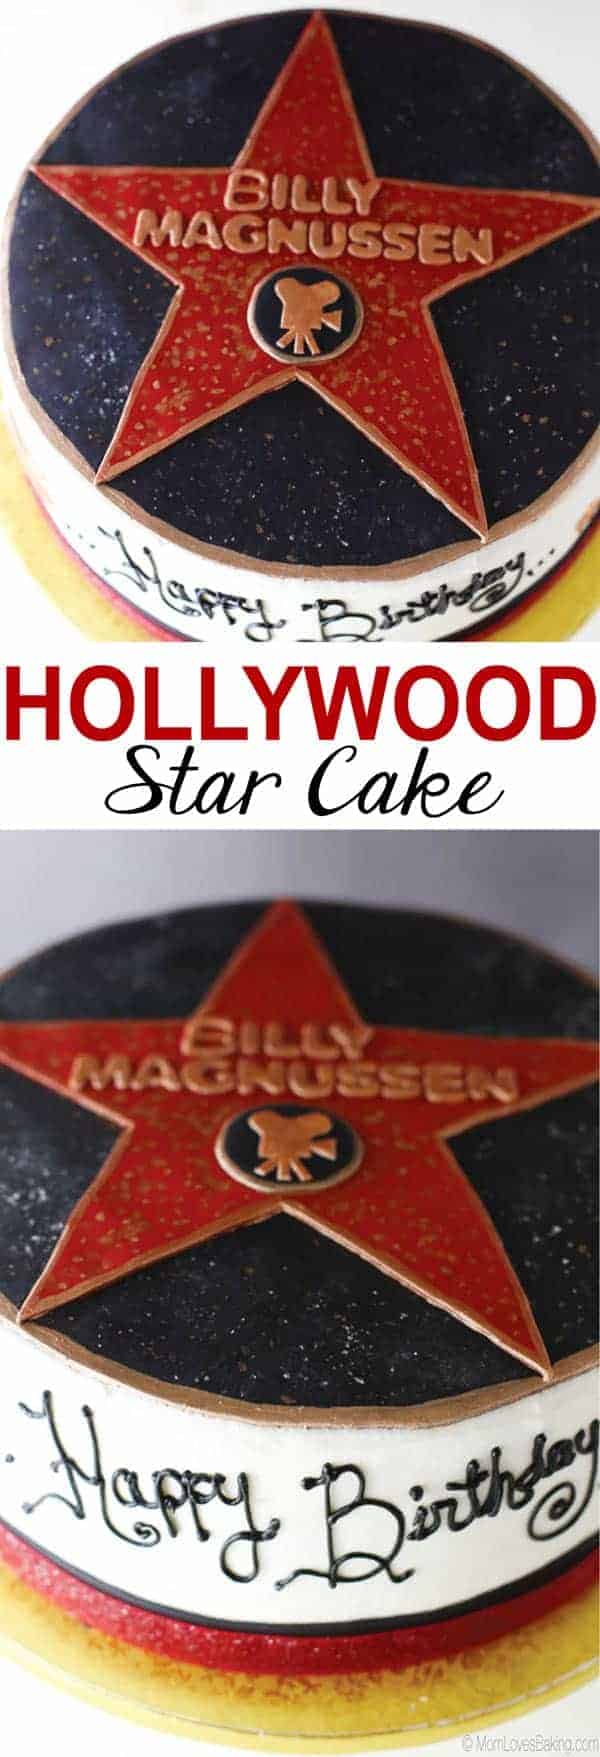 Hollywood Walk of Fame Star Cake